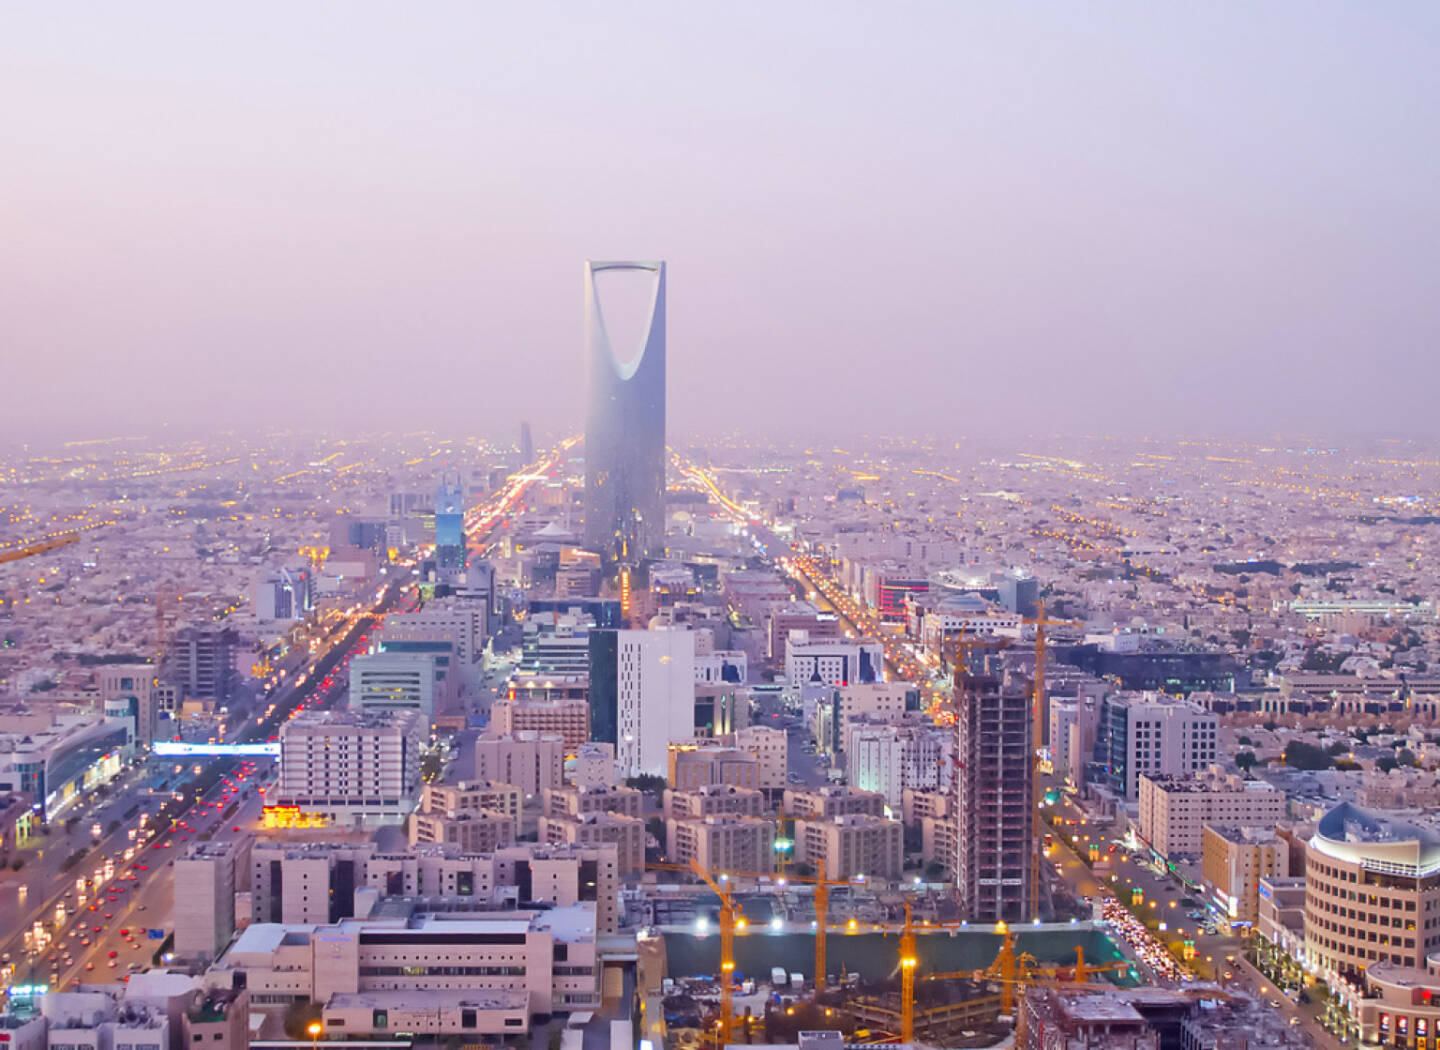 Riad, Saudi Arabien, http://www.shutterstock.com/de/pic-123225238/stock-photo-riyadh-december-kingdom-tower-on-december-in-riyadh-saudi-arabia-kingdom-tower-is.html